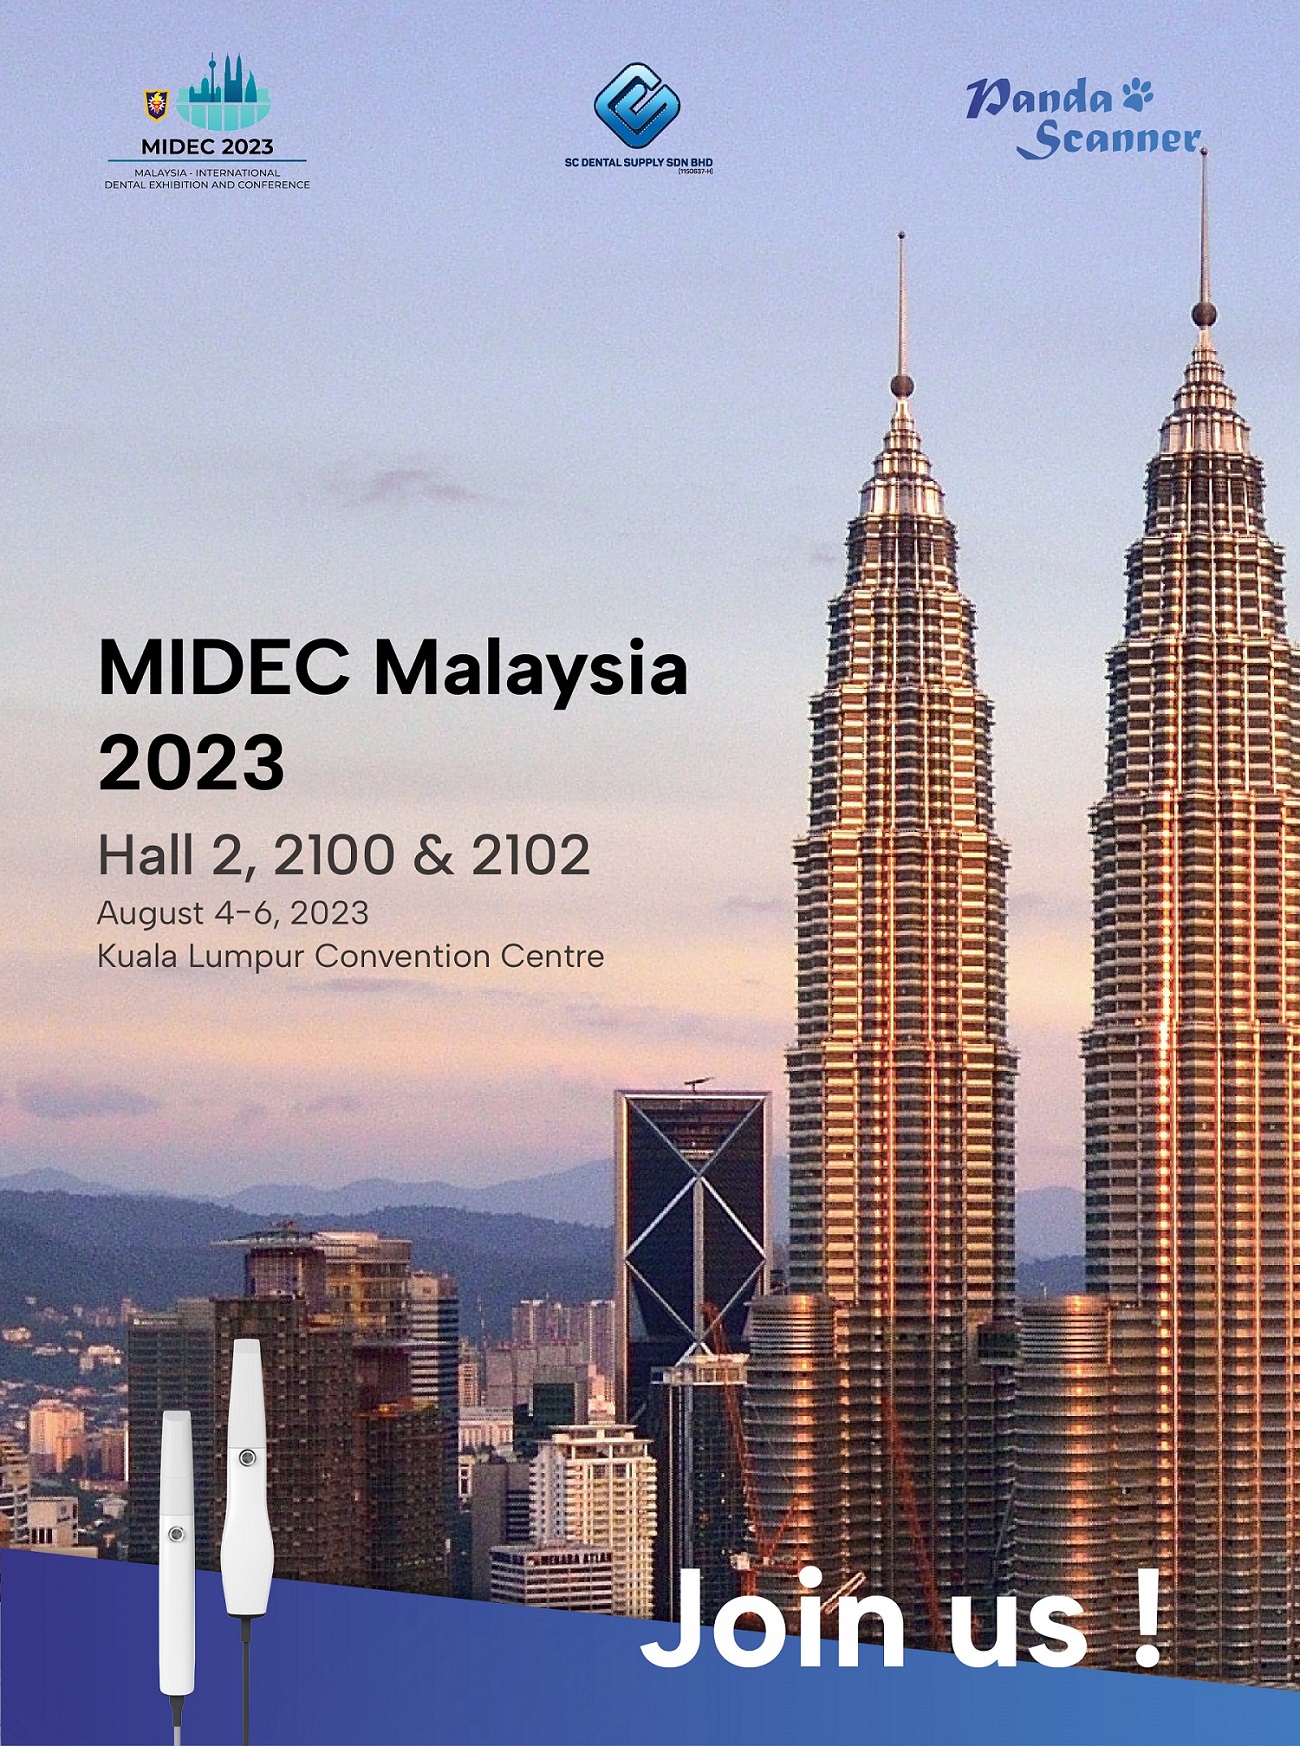 Panda Scanner te invita a participar en el MIDEC Malasia 2023